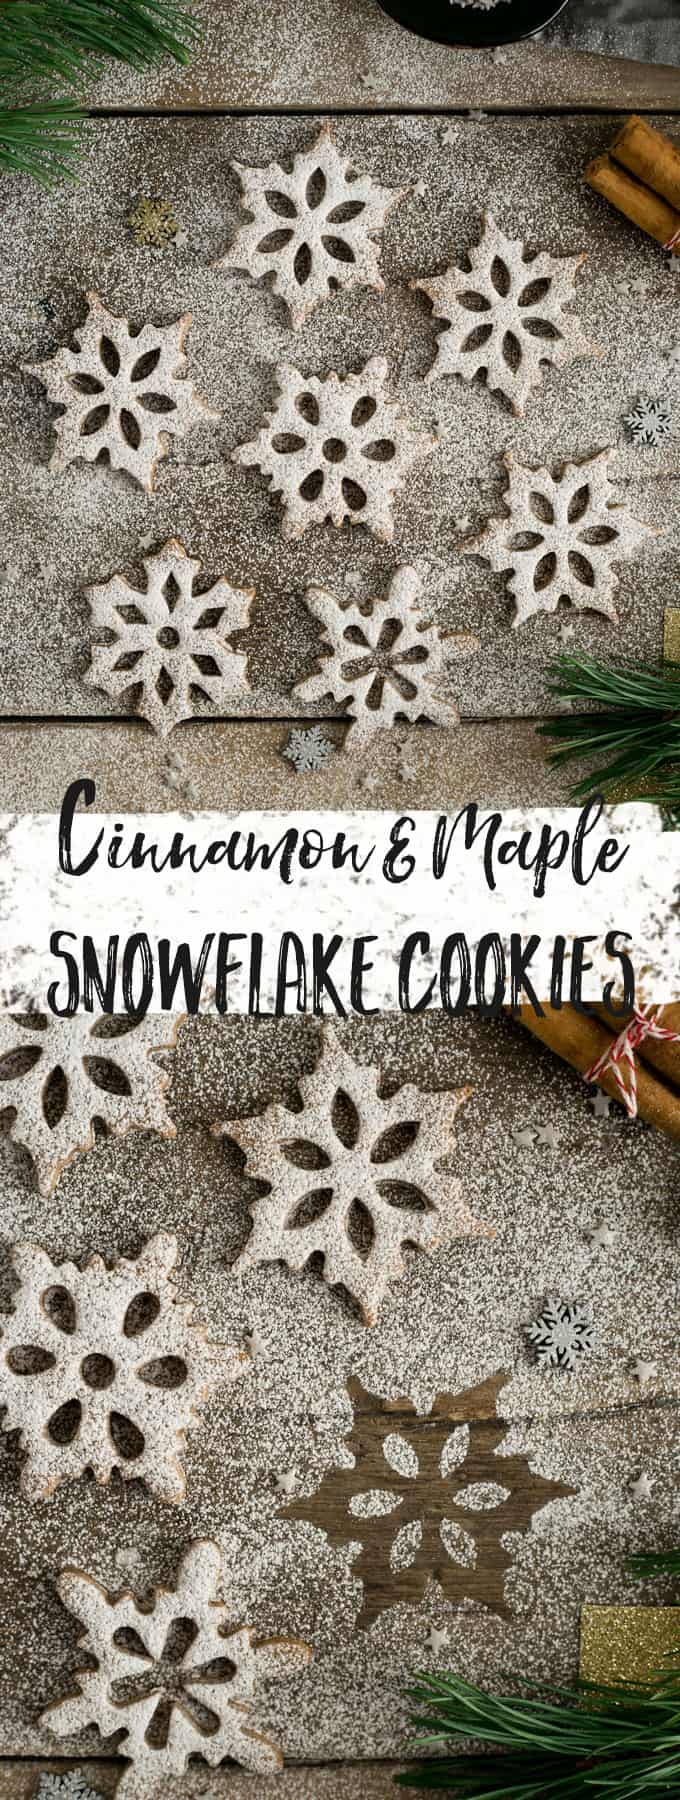 Delicious and festive cinnamon and maple snowflake cookies! #cookies #vegan #Christmas | via @annabanana.co